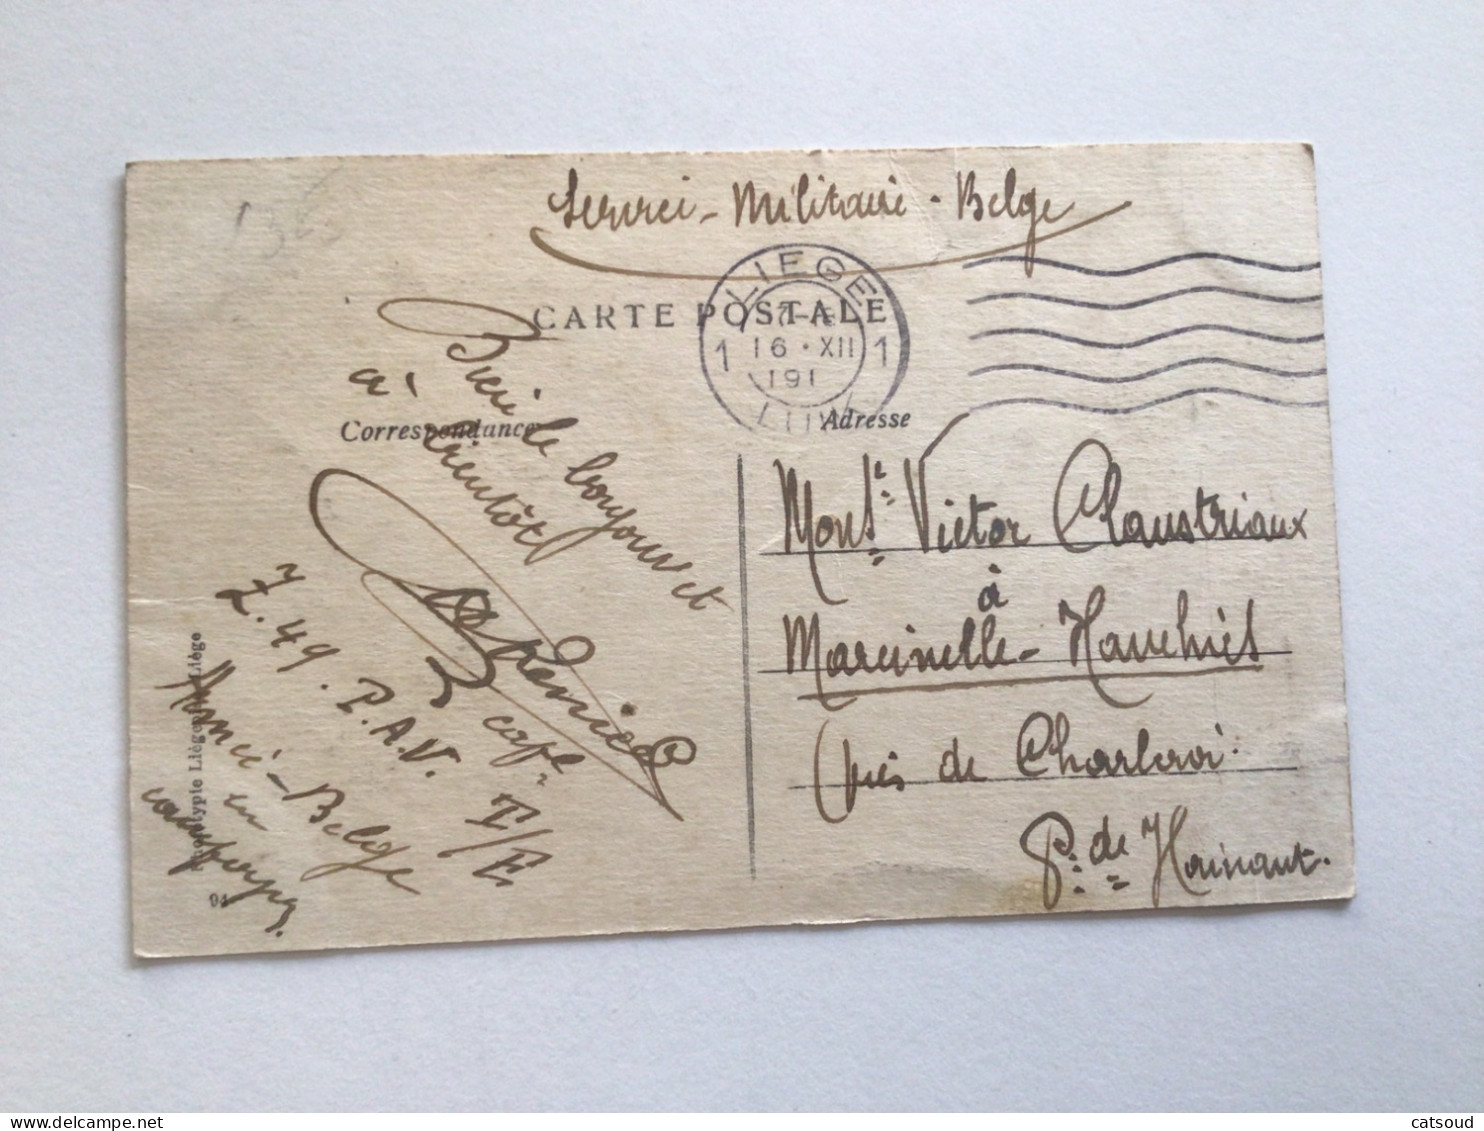 Carte Postale Ancienne (1918) Liège Villas à Cointe N°1 - Liege